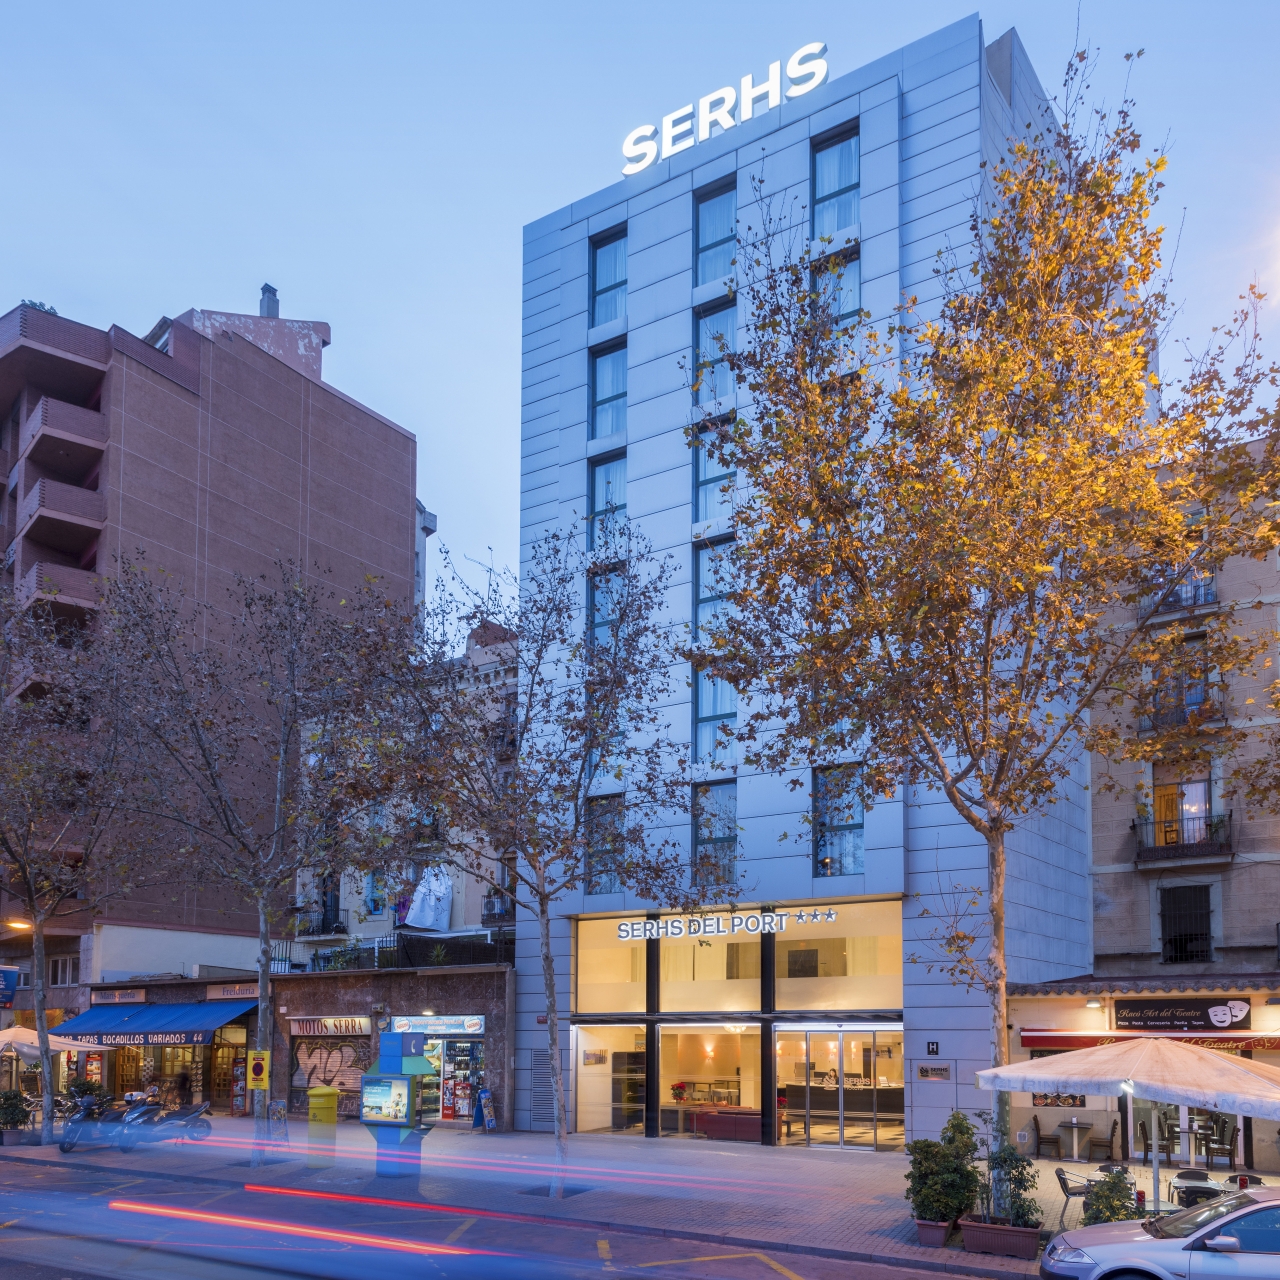 Hotel Serhs del Port - 3 HRS star hotel in Barcelona (Catalonia)